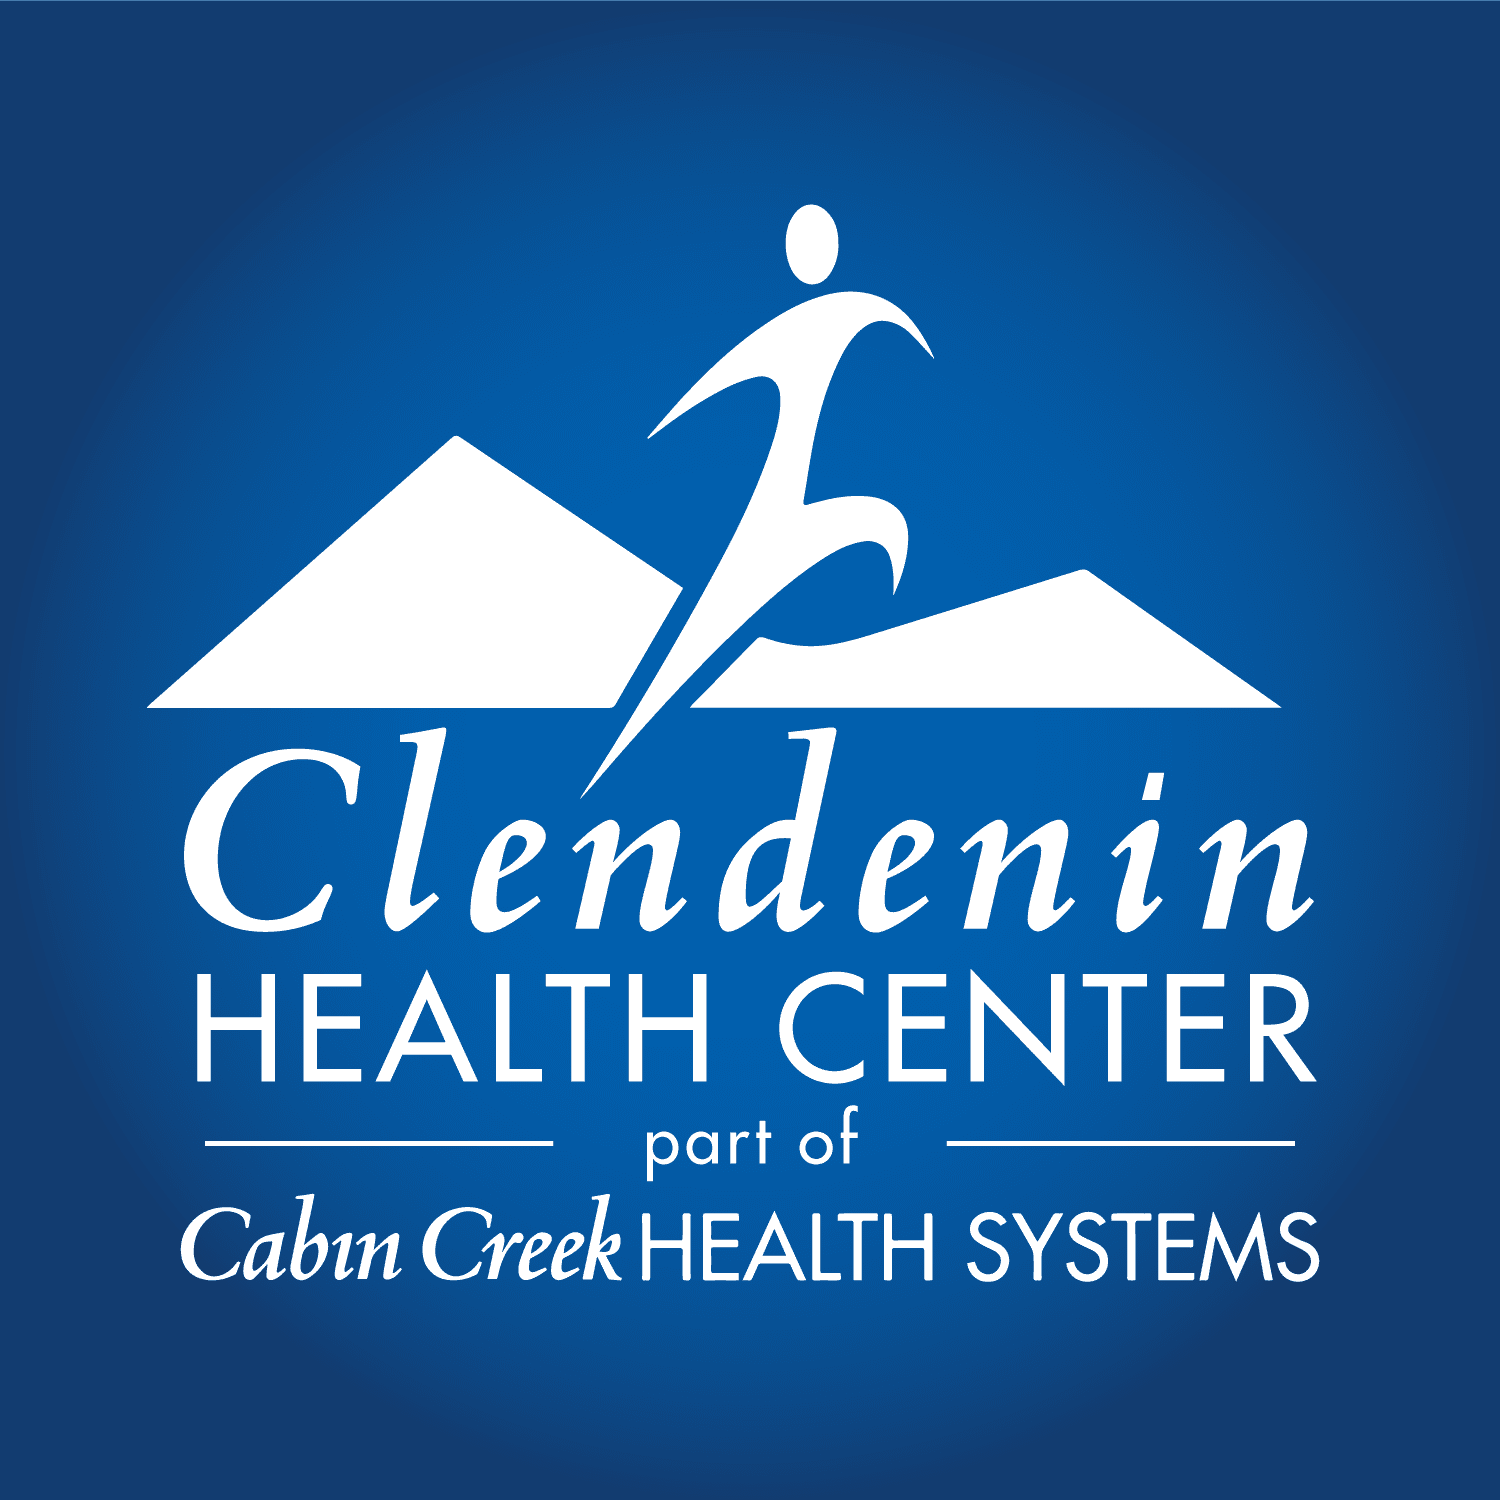 Clendenin Health Center Cabin Creek Health Center - Clendenin, 107 Koontz Ave Ste 200, Clendenin West Virginia 25045